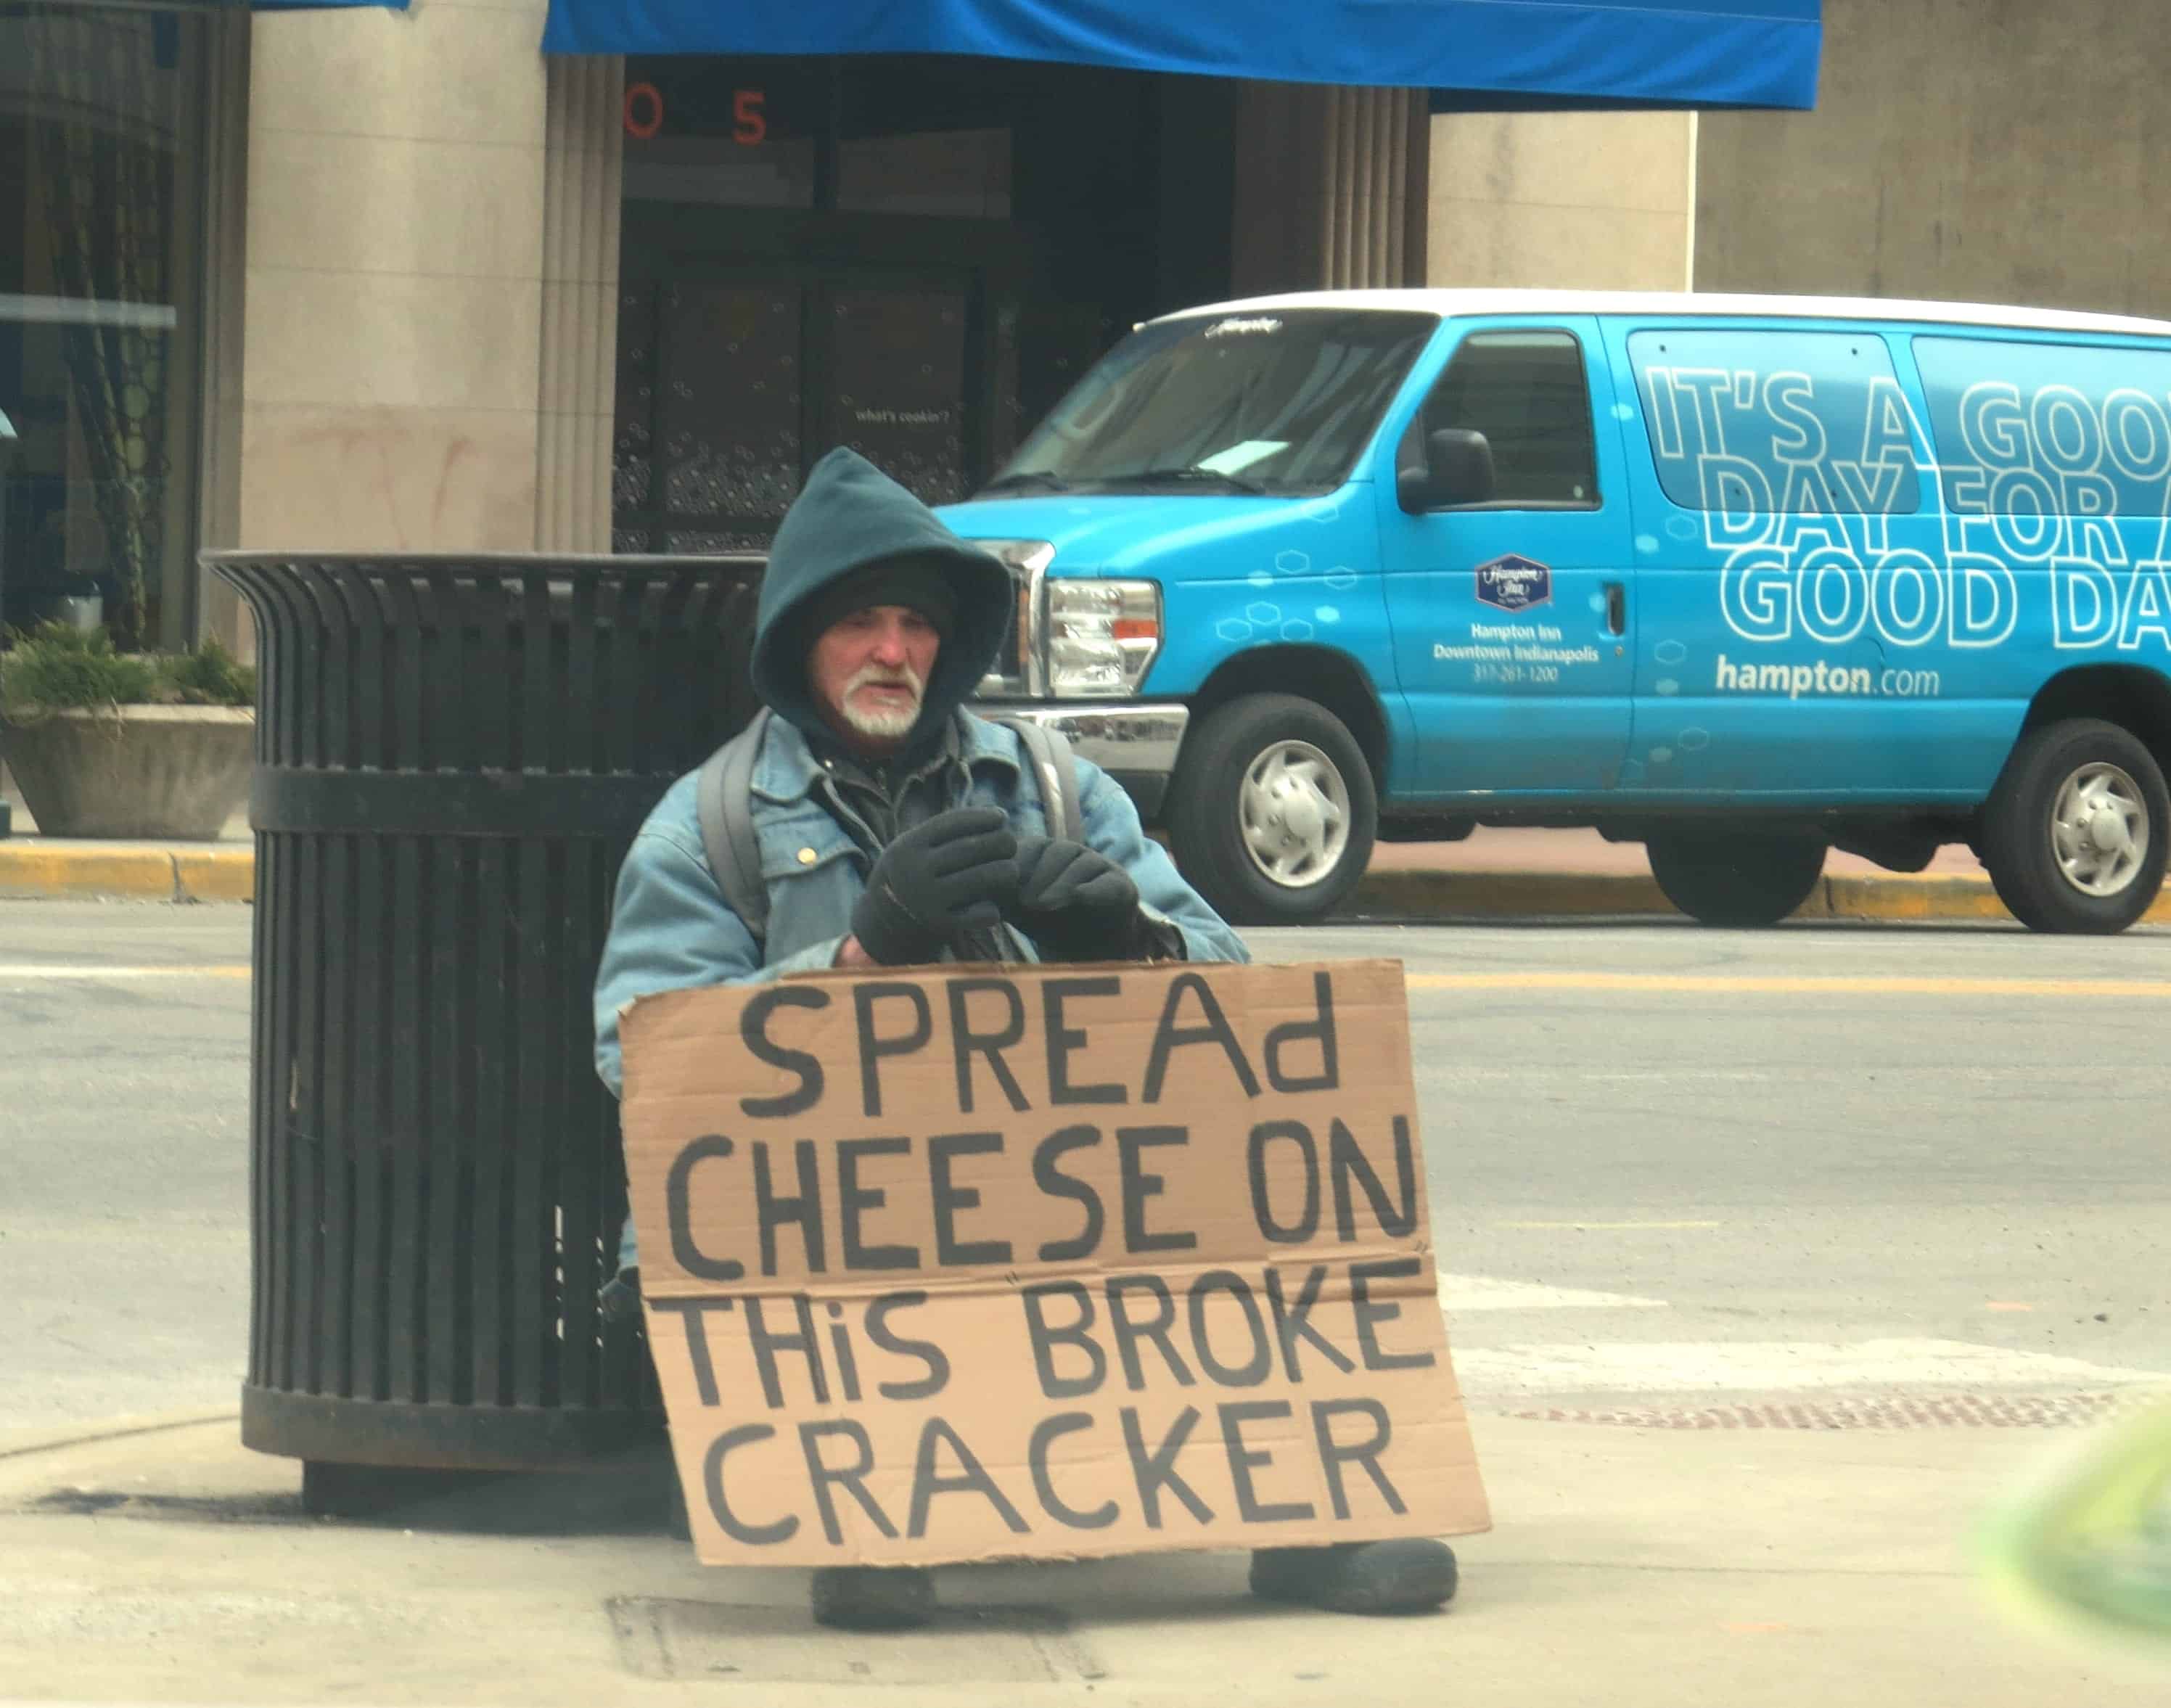 Hajléktalan táblával "Spread cheese on this broke cracker"